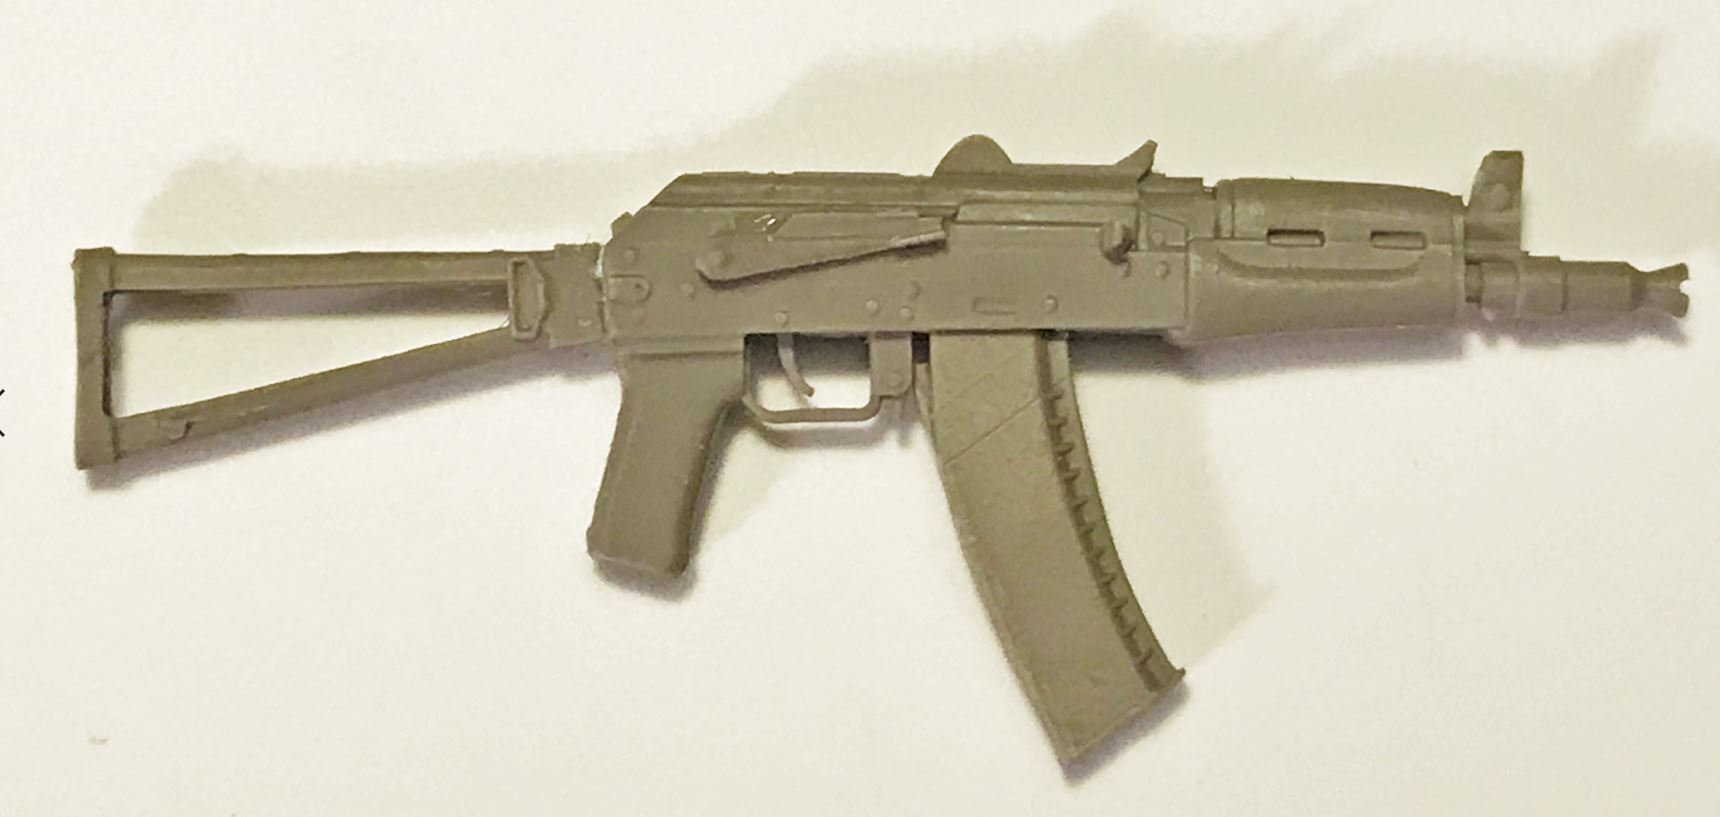 Quasar AKS-74U